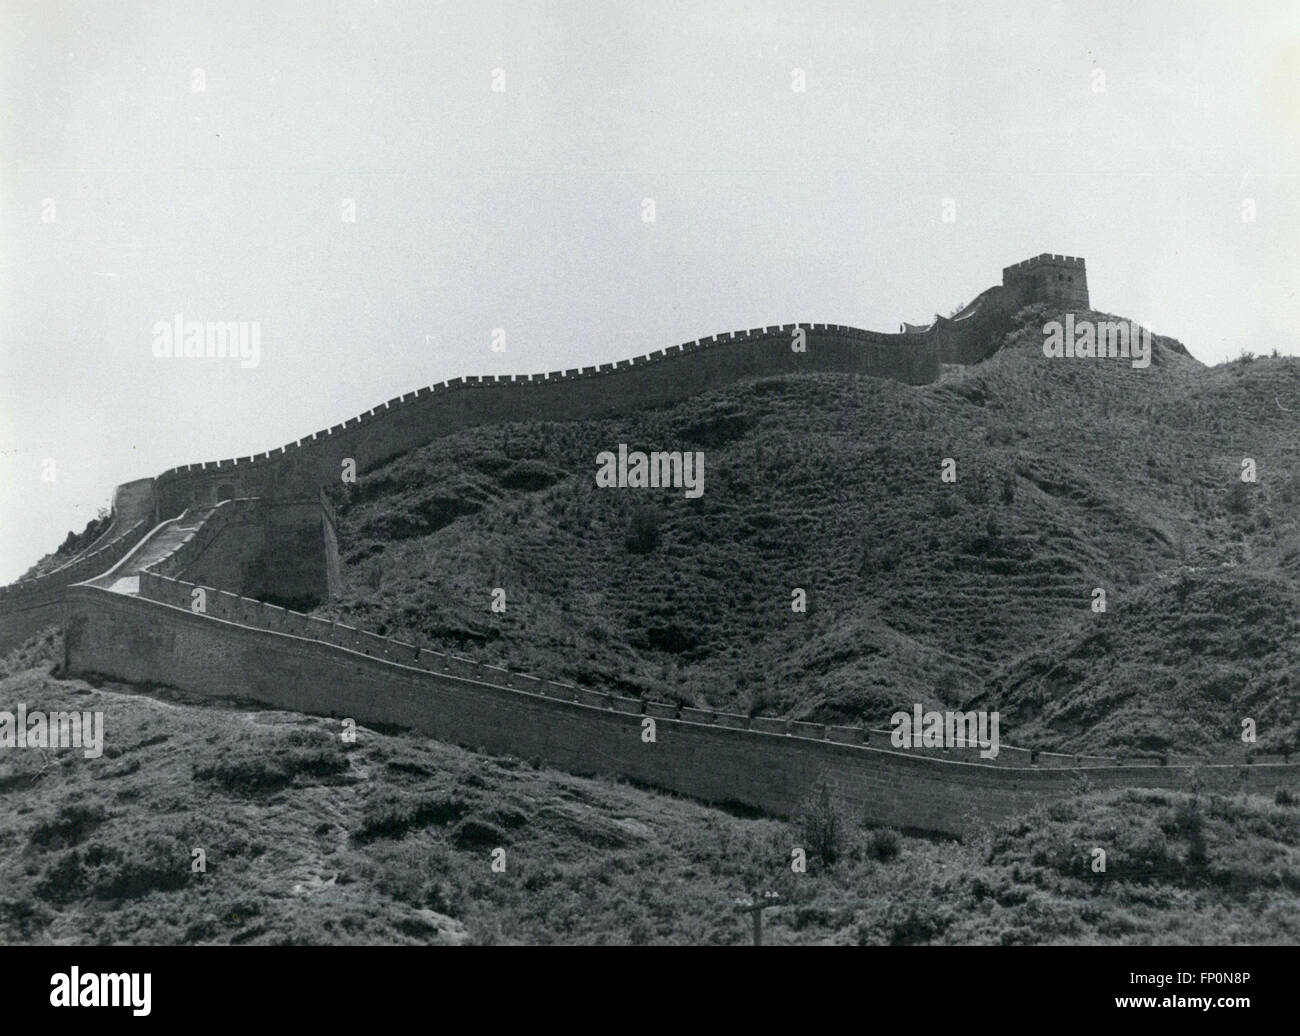 1962 - La Chine Rouge - Great Wall Crédit : D. Grinard © Keystone Photos USA/ZUMAPRESS.com/Alamy Live News Banque D'Images